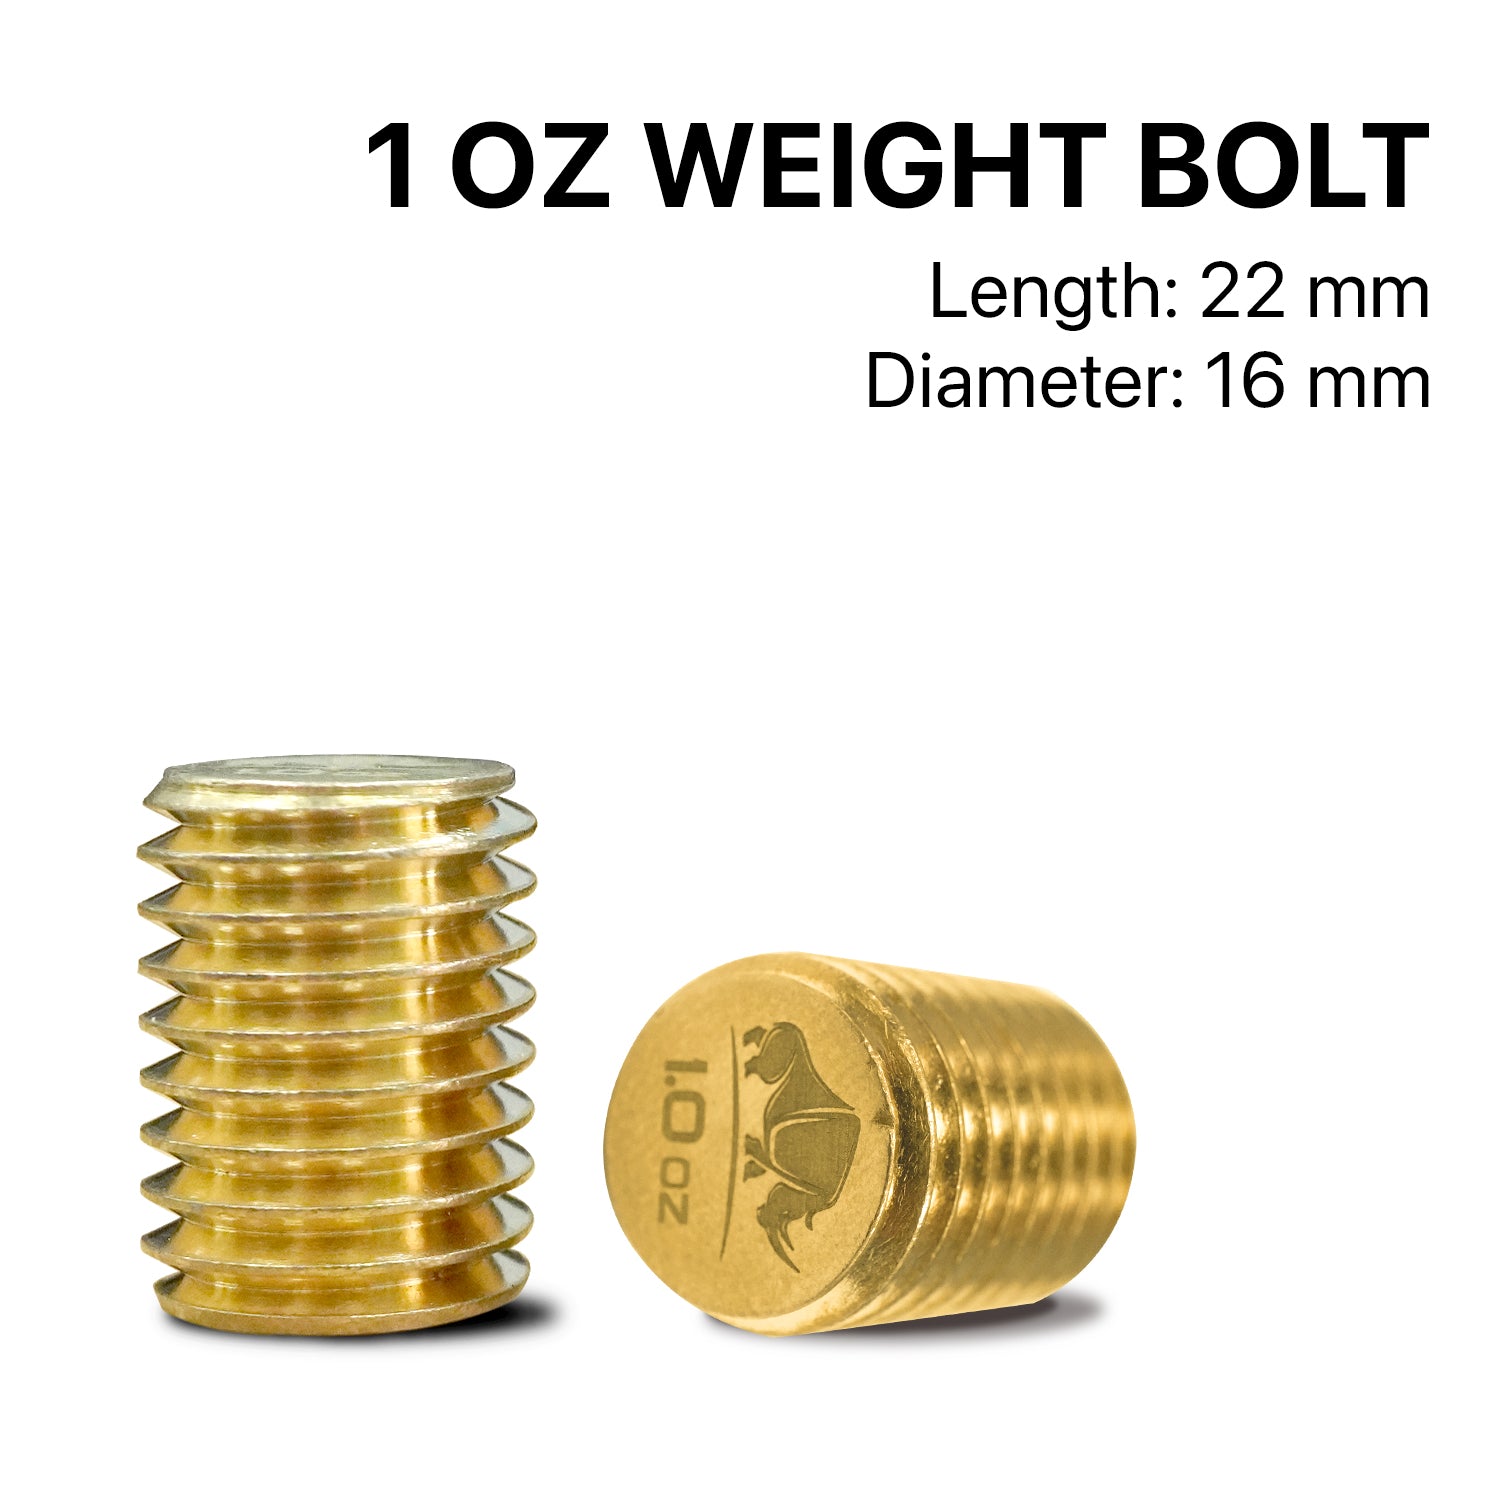 RHINO - Weight Bolt Kit